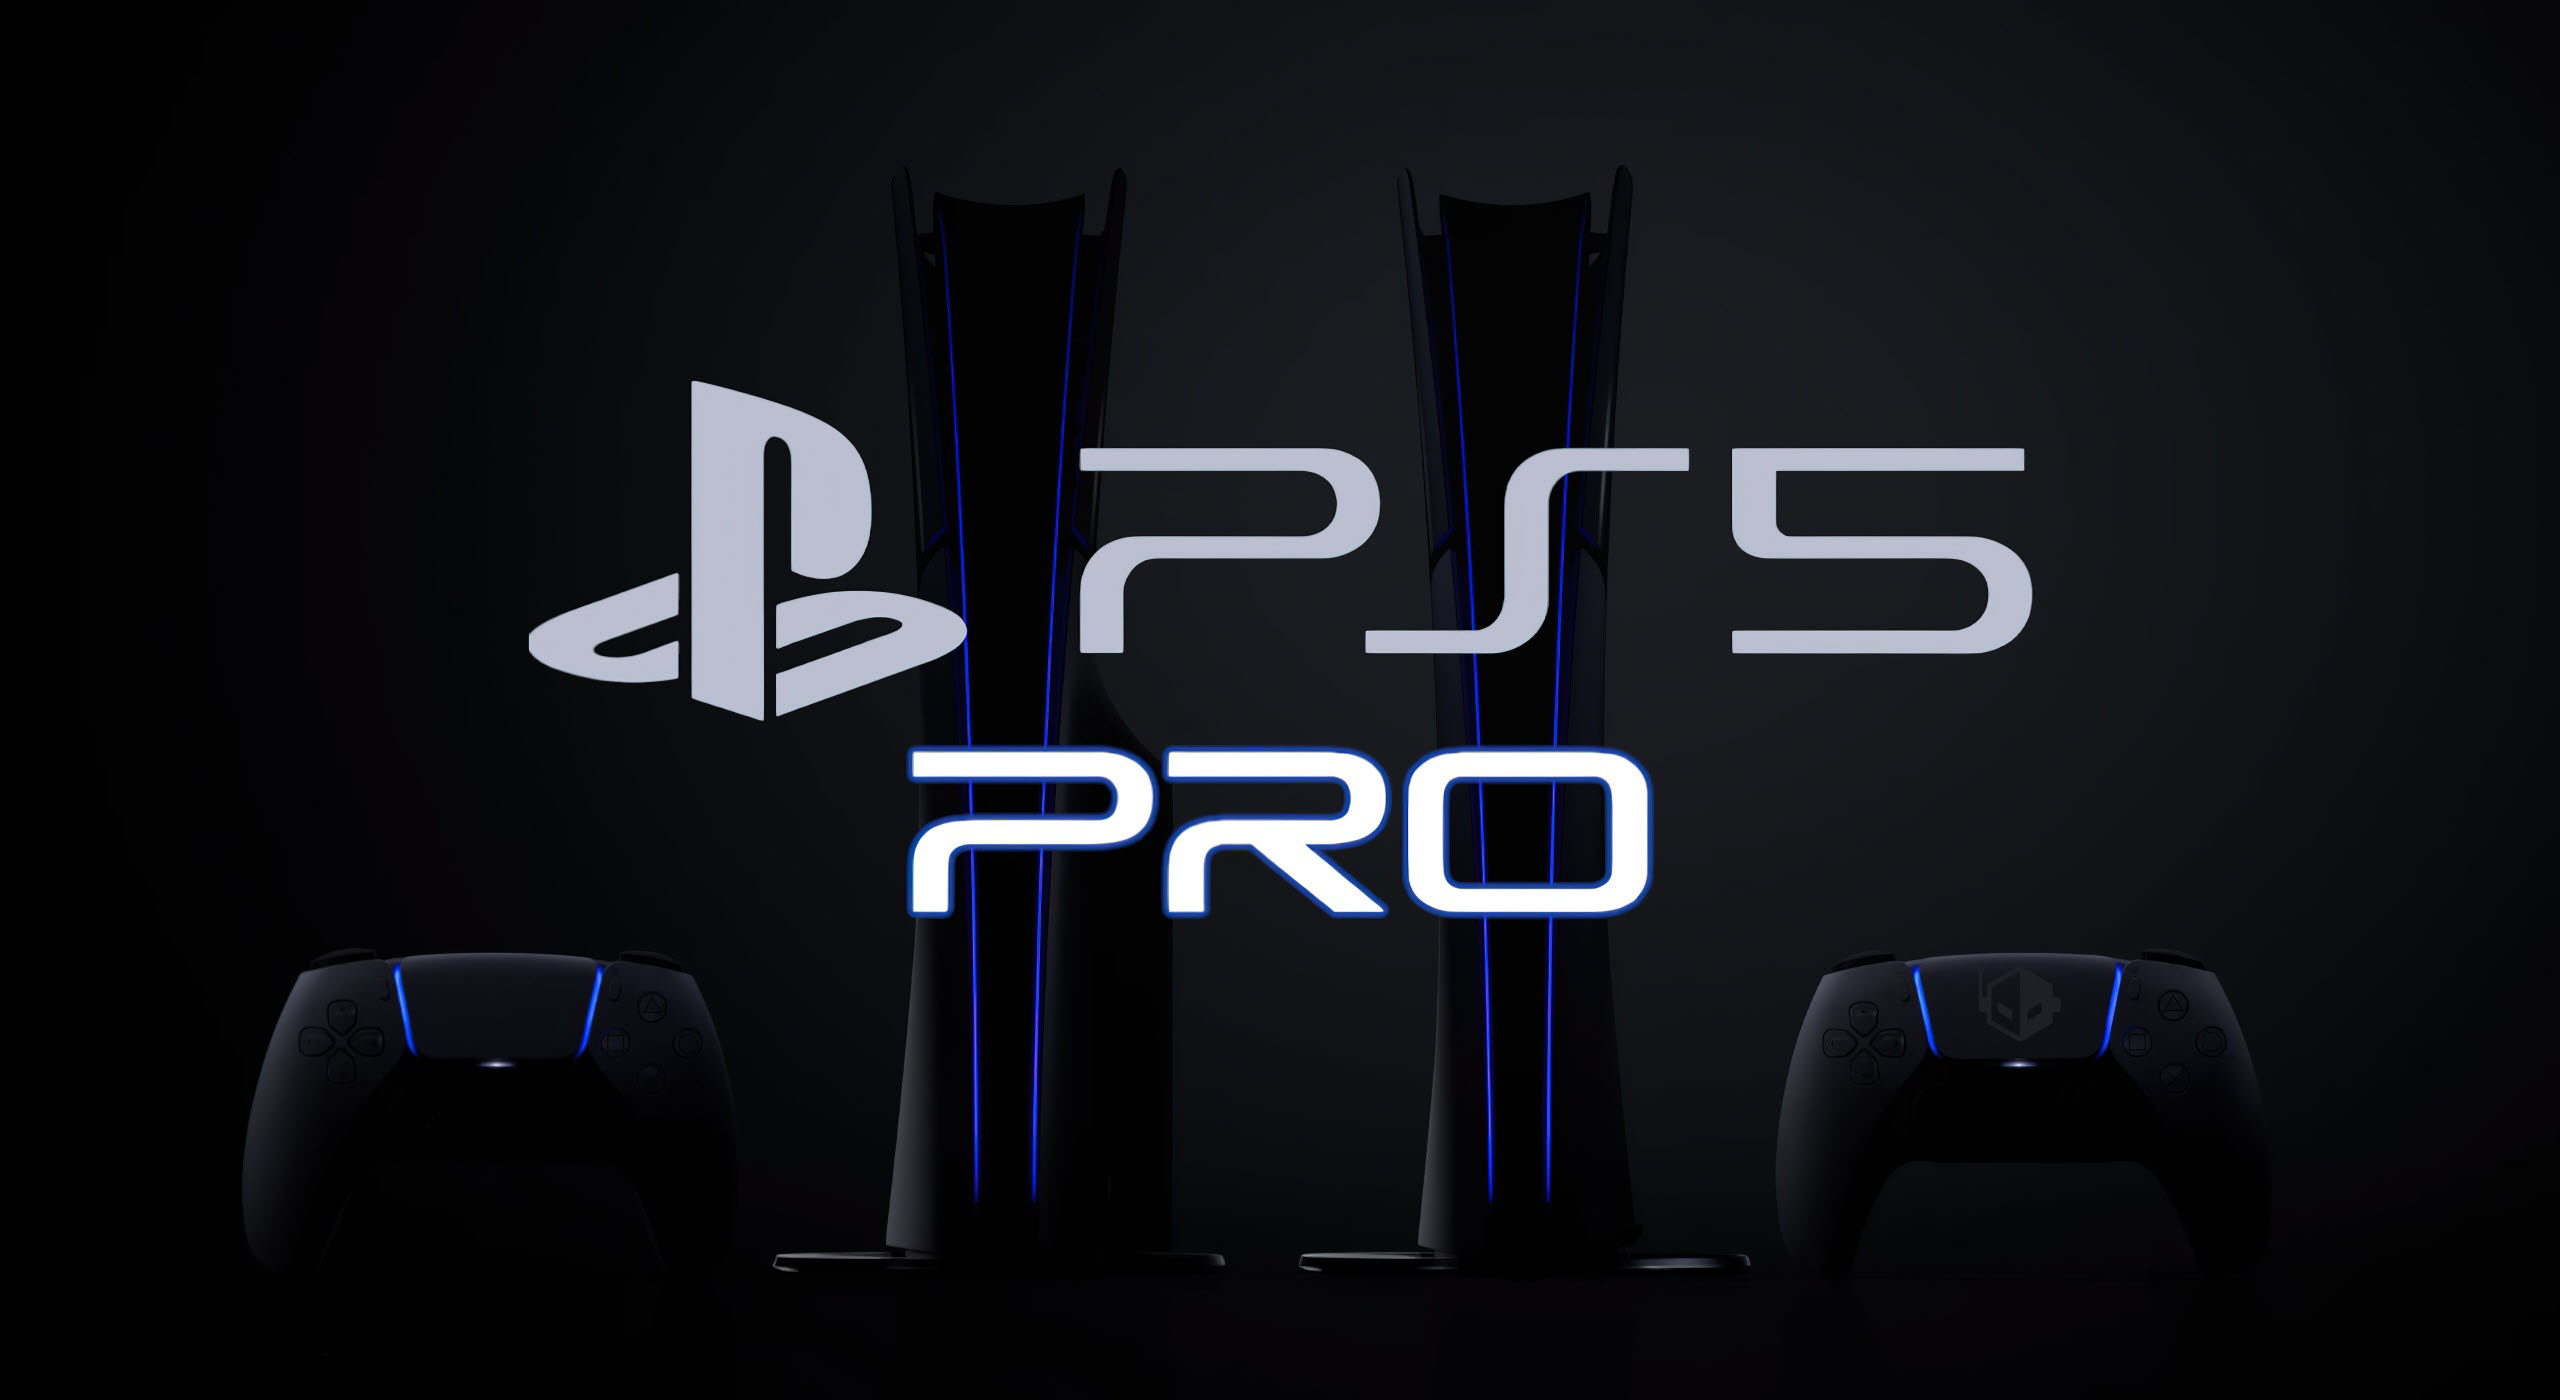 PS5 Pro将有独占“Pro强化”游戏：4K+60FPS+光追